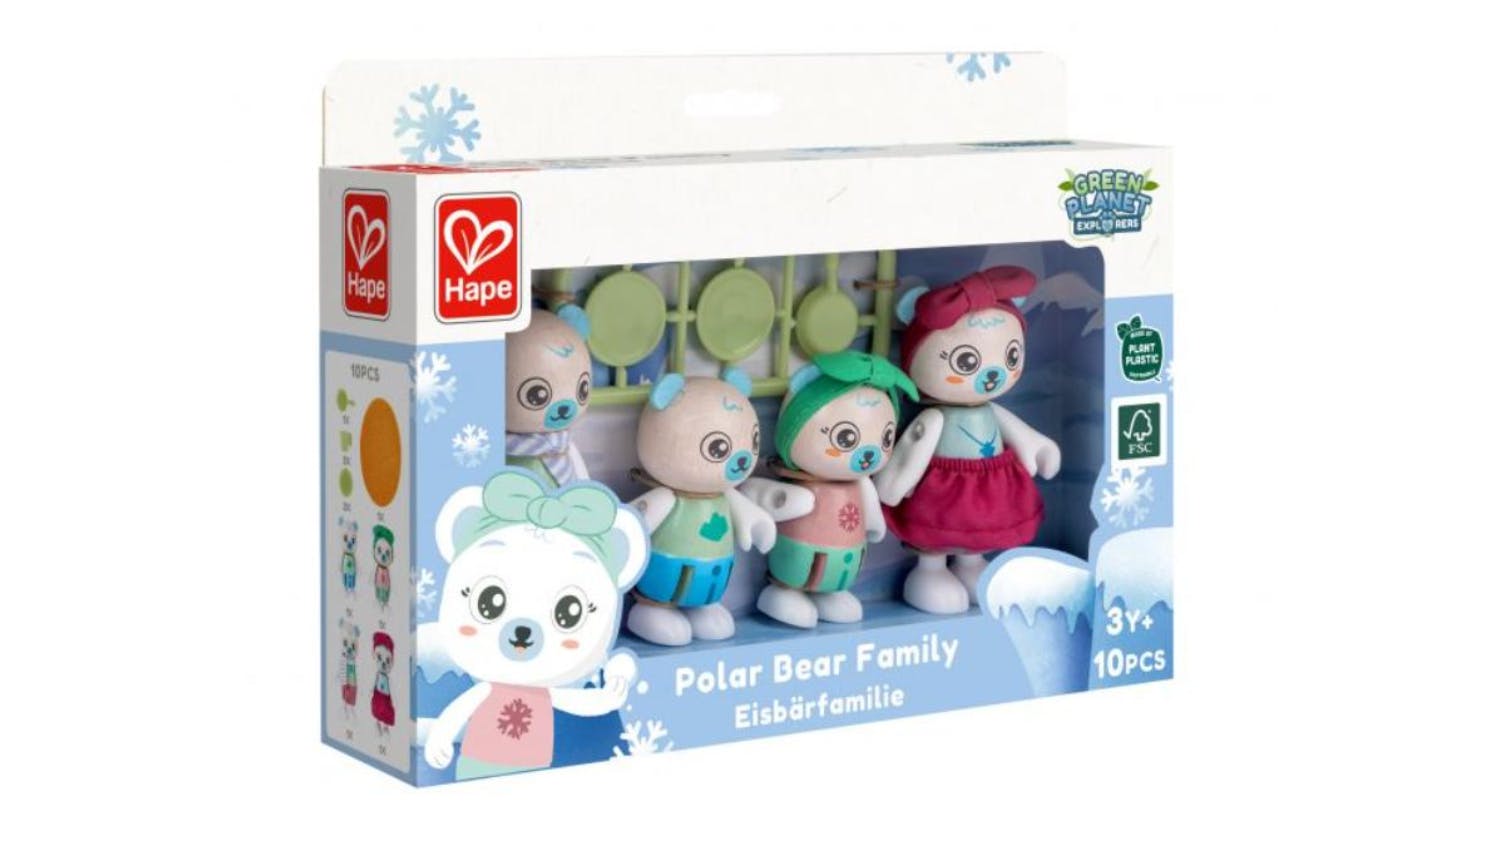 Hape "Green Planet" Figurine Set - Polar Bear Family